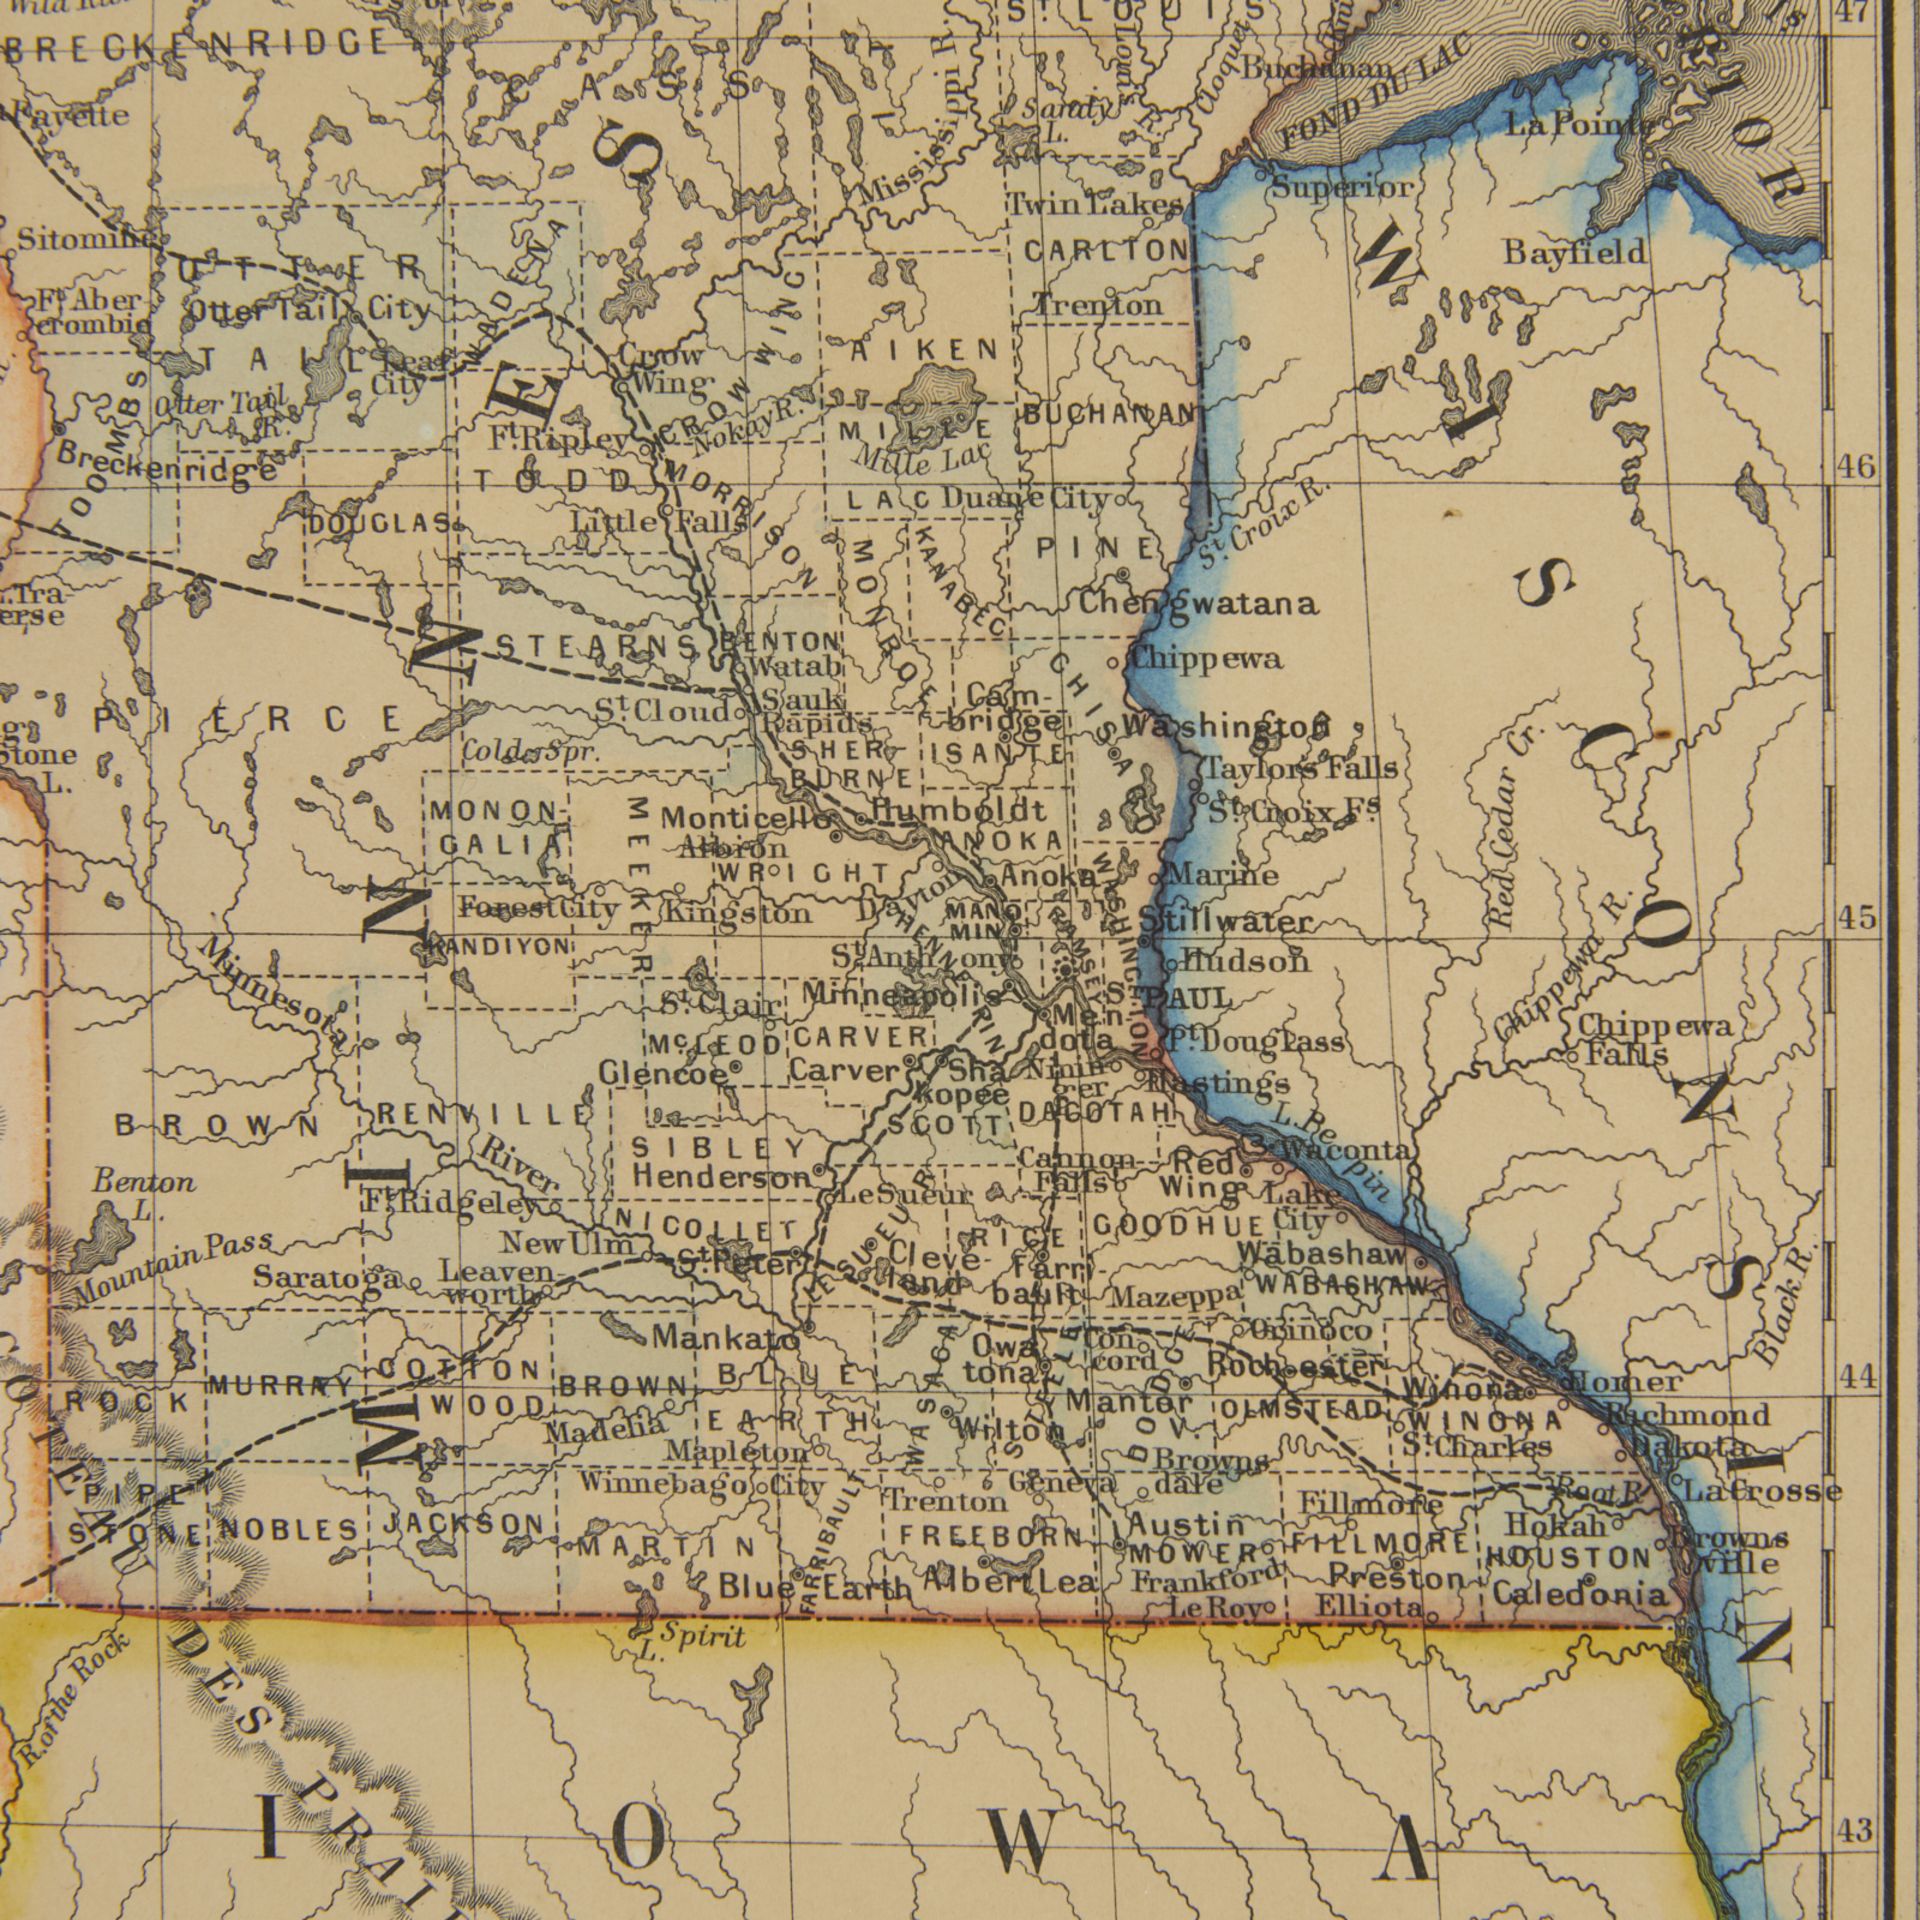 1860 Minnesota and Dacotah Territory Map - Image 4 of 6